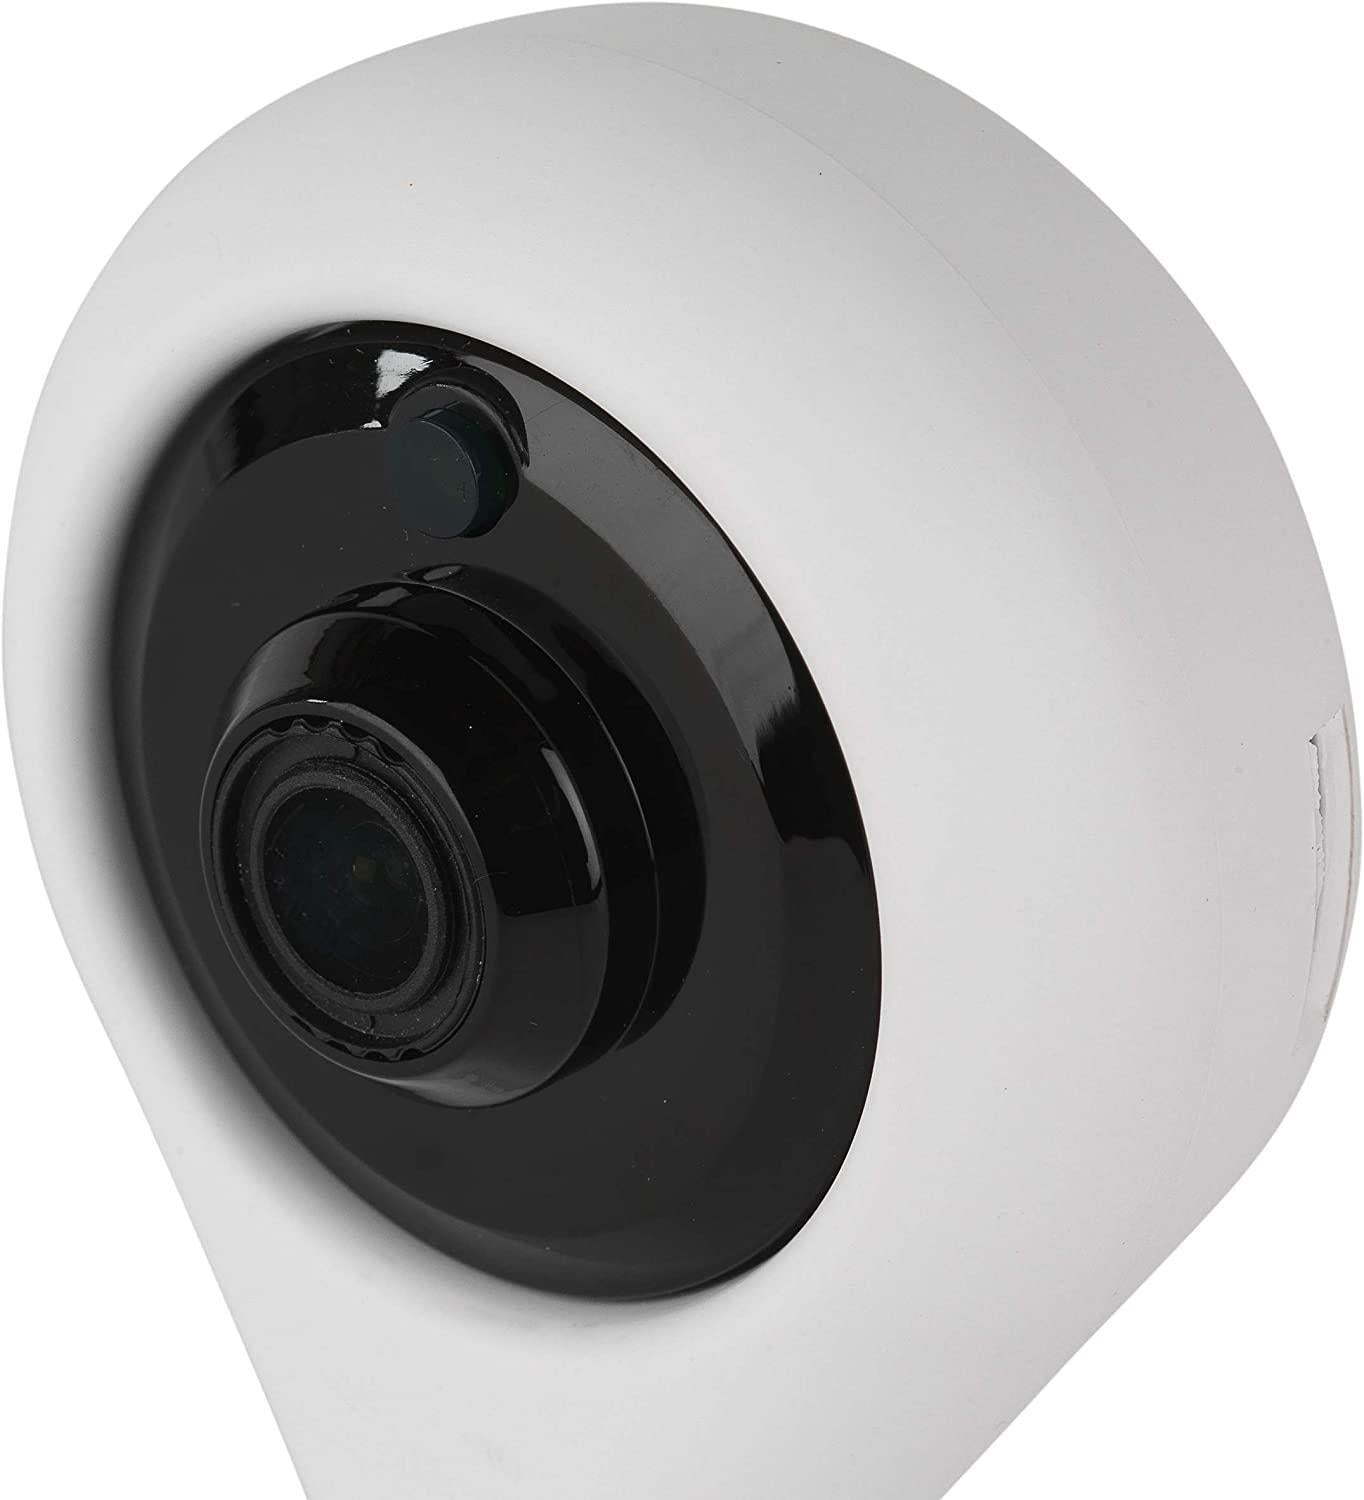 Intempo Indoor Security Smart IP Camera 720p